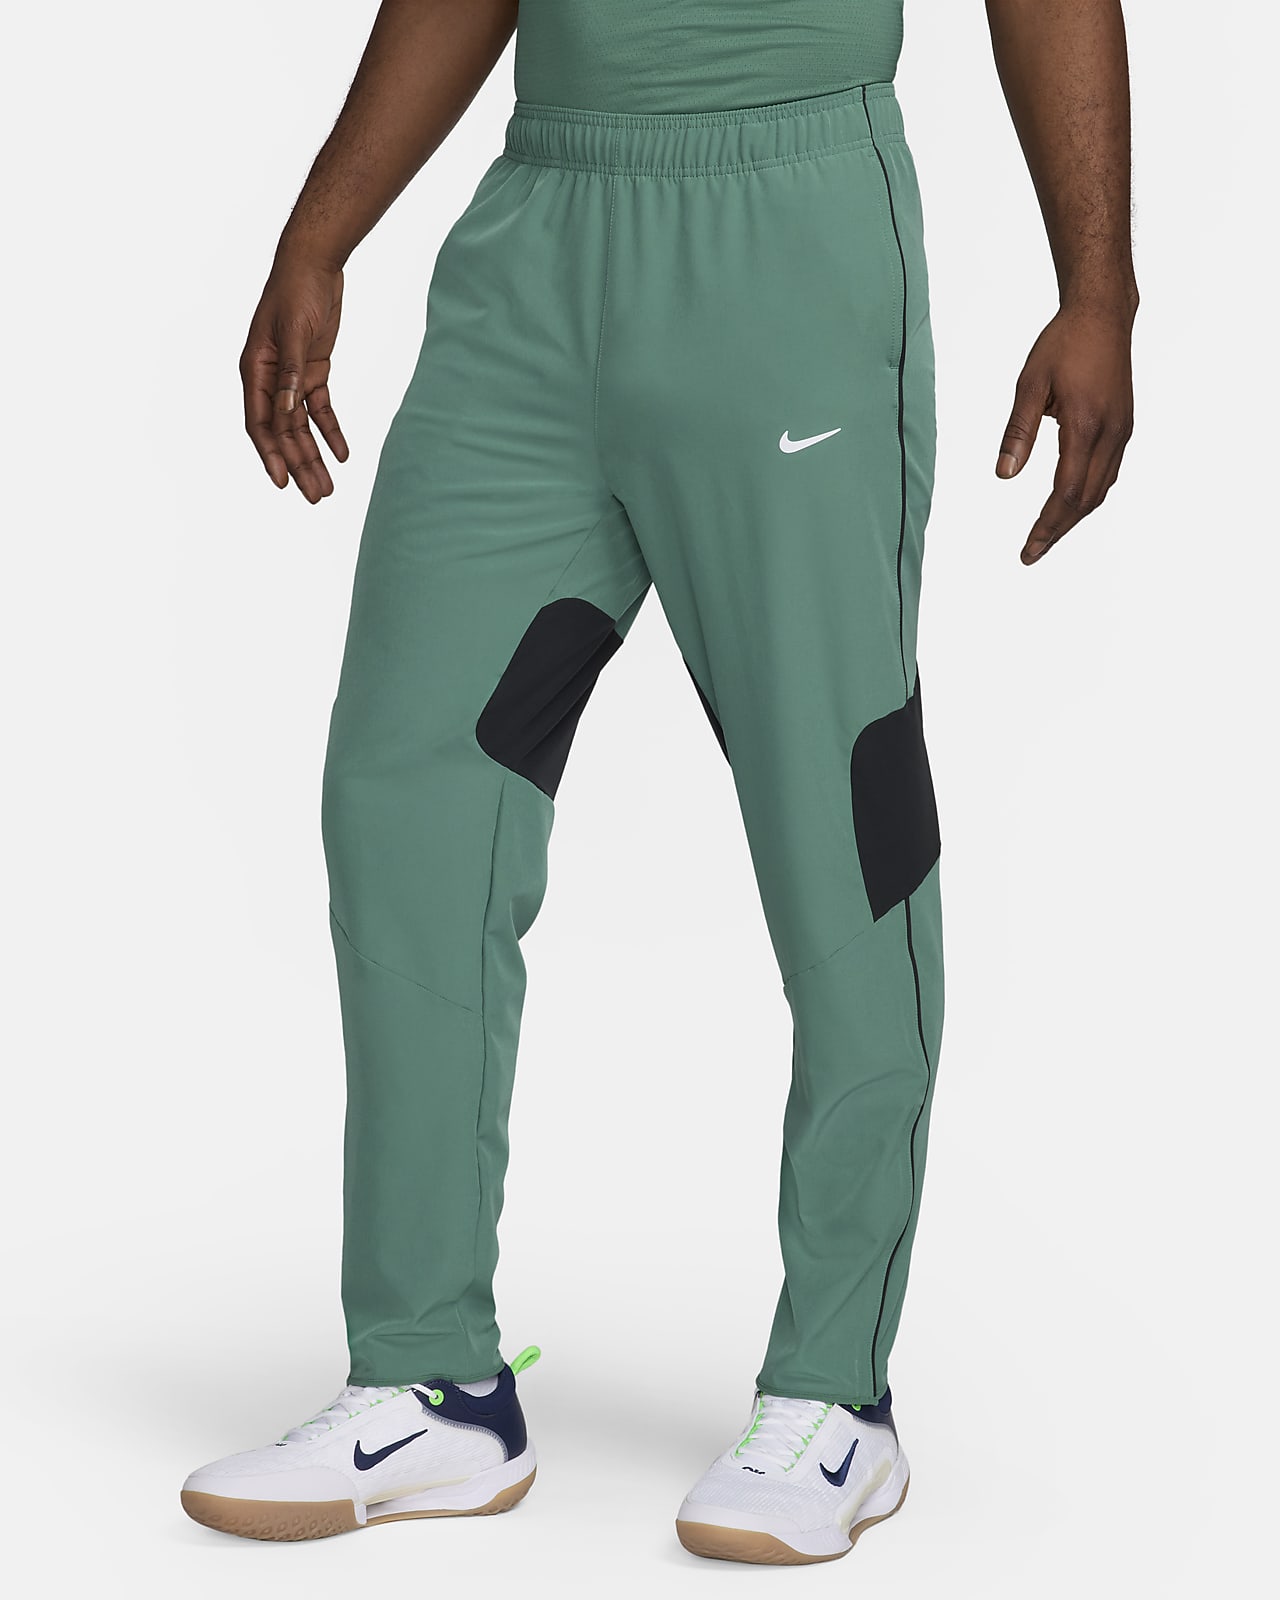 NikeCourt Advantage Men's Dri-FIT Tennis Pants